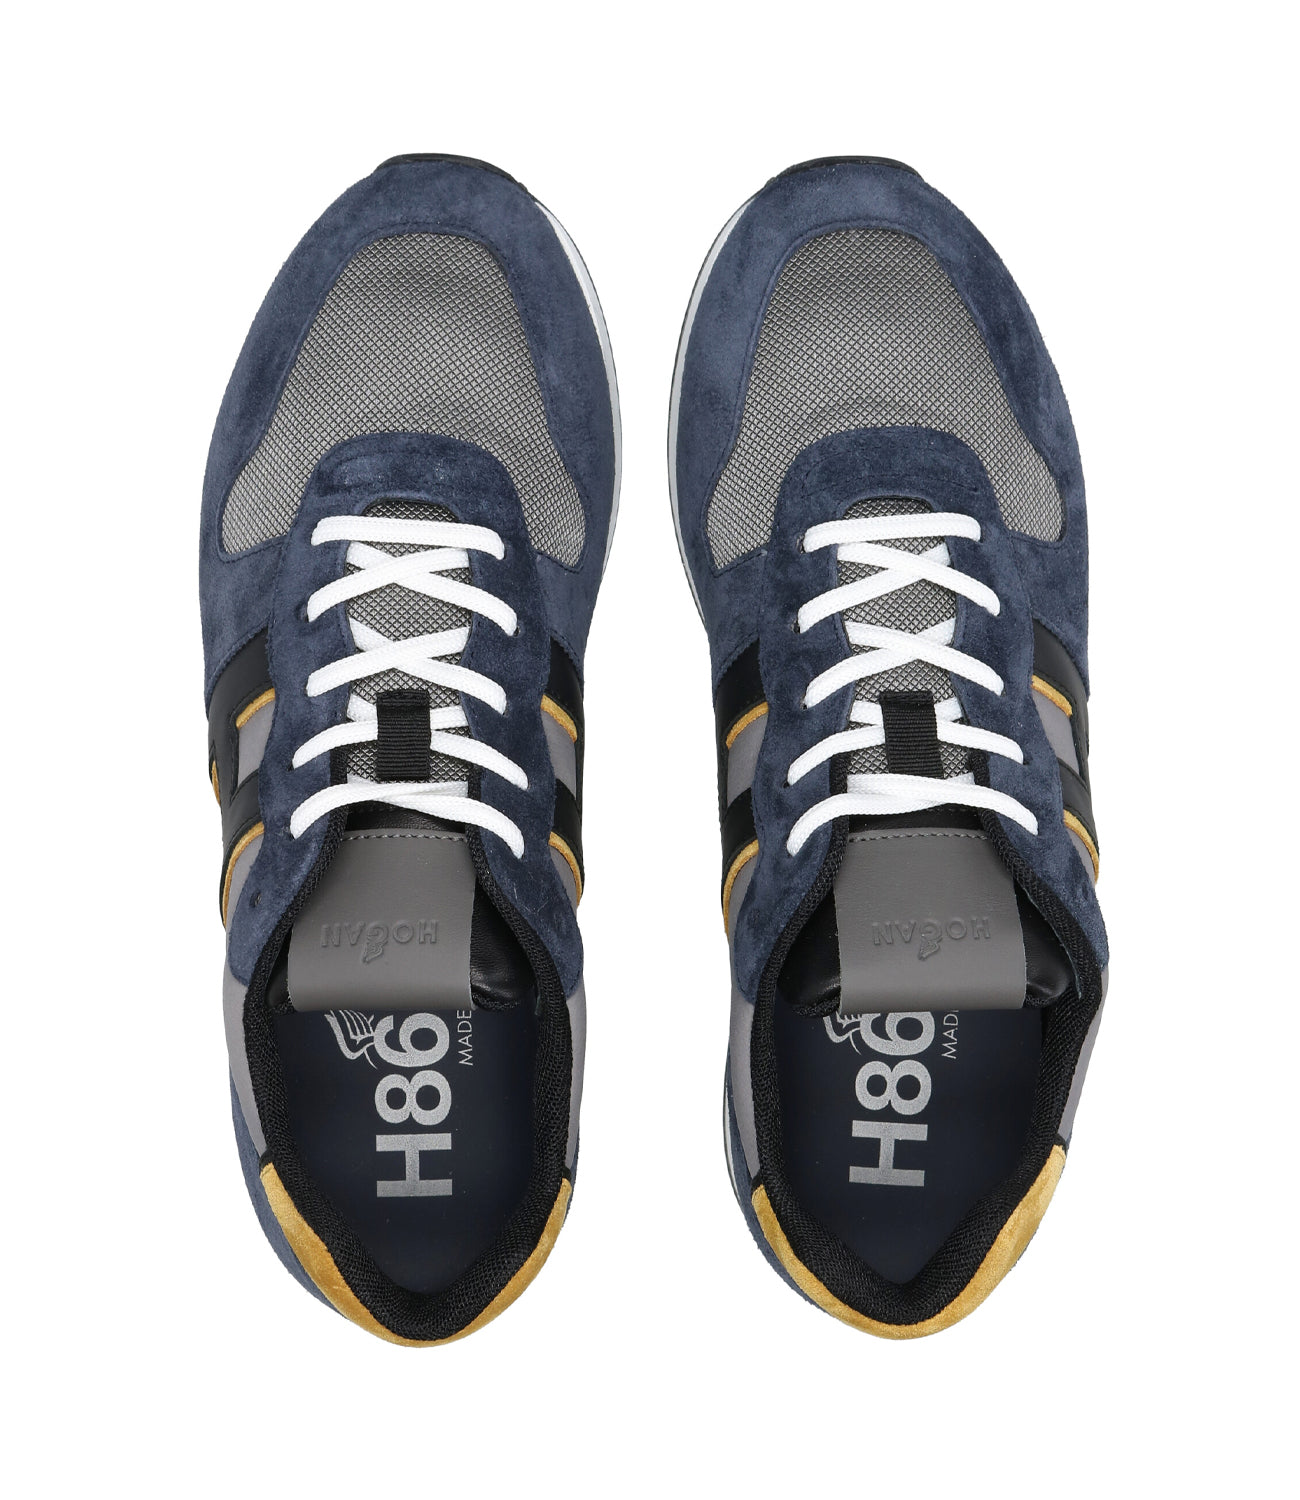 Hogan | Sneakers H383 Blu, Giallo e Grigio